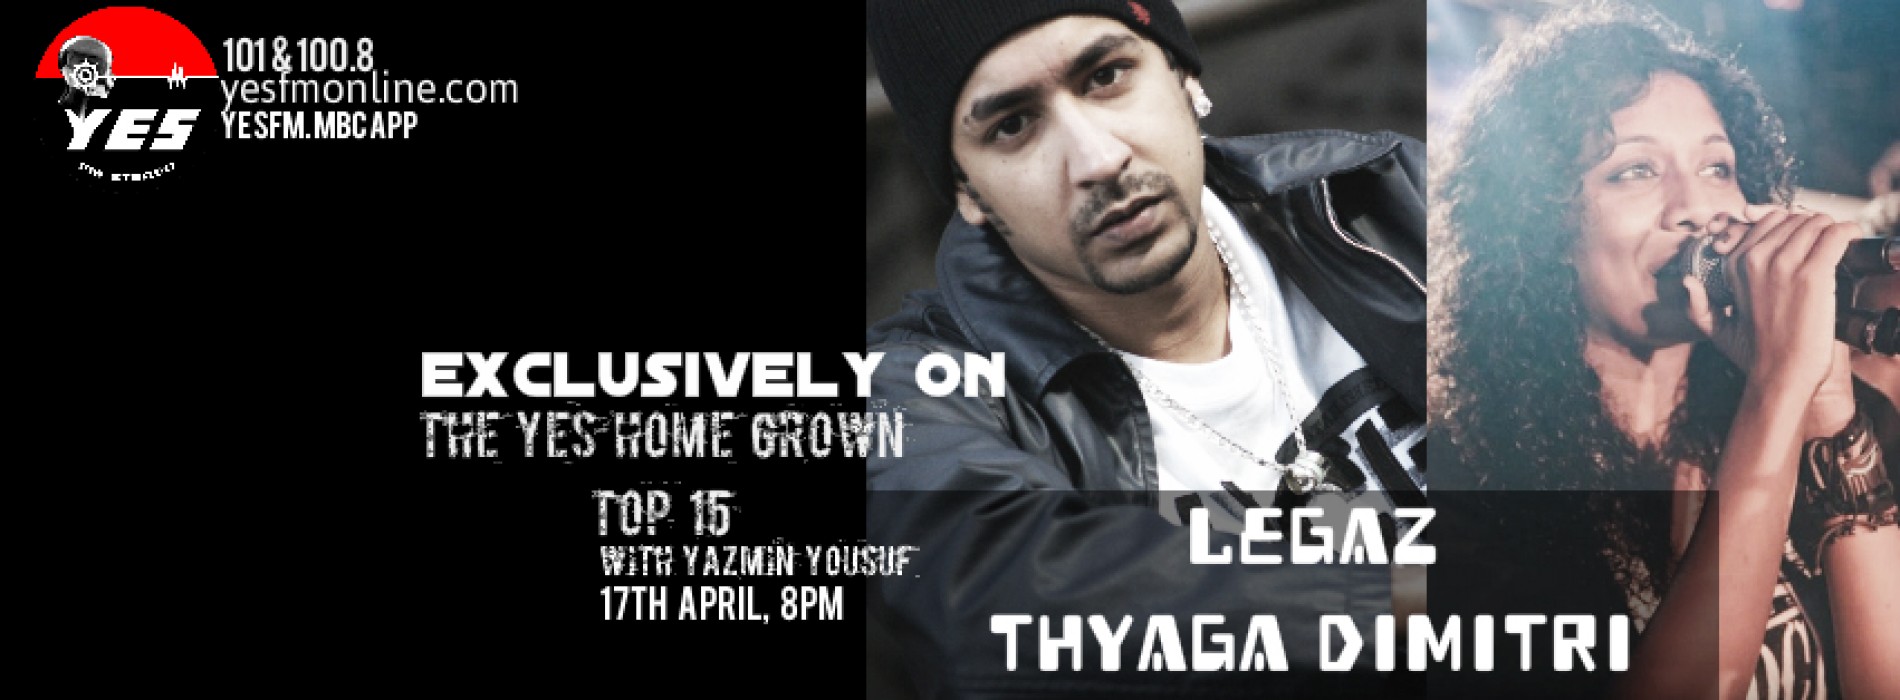 Legaz & Thyaga Dimitri On The YES Home Grown Top 15